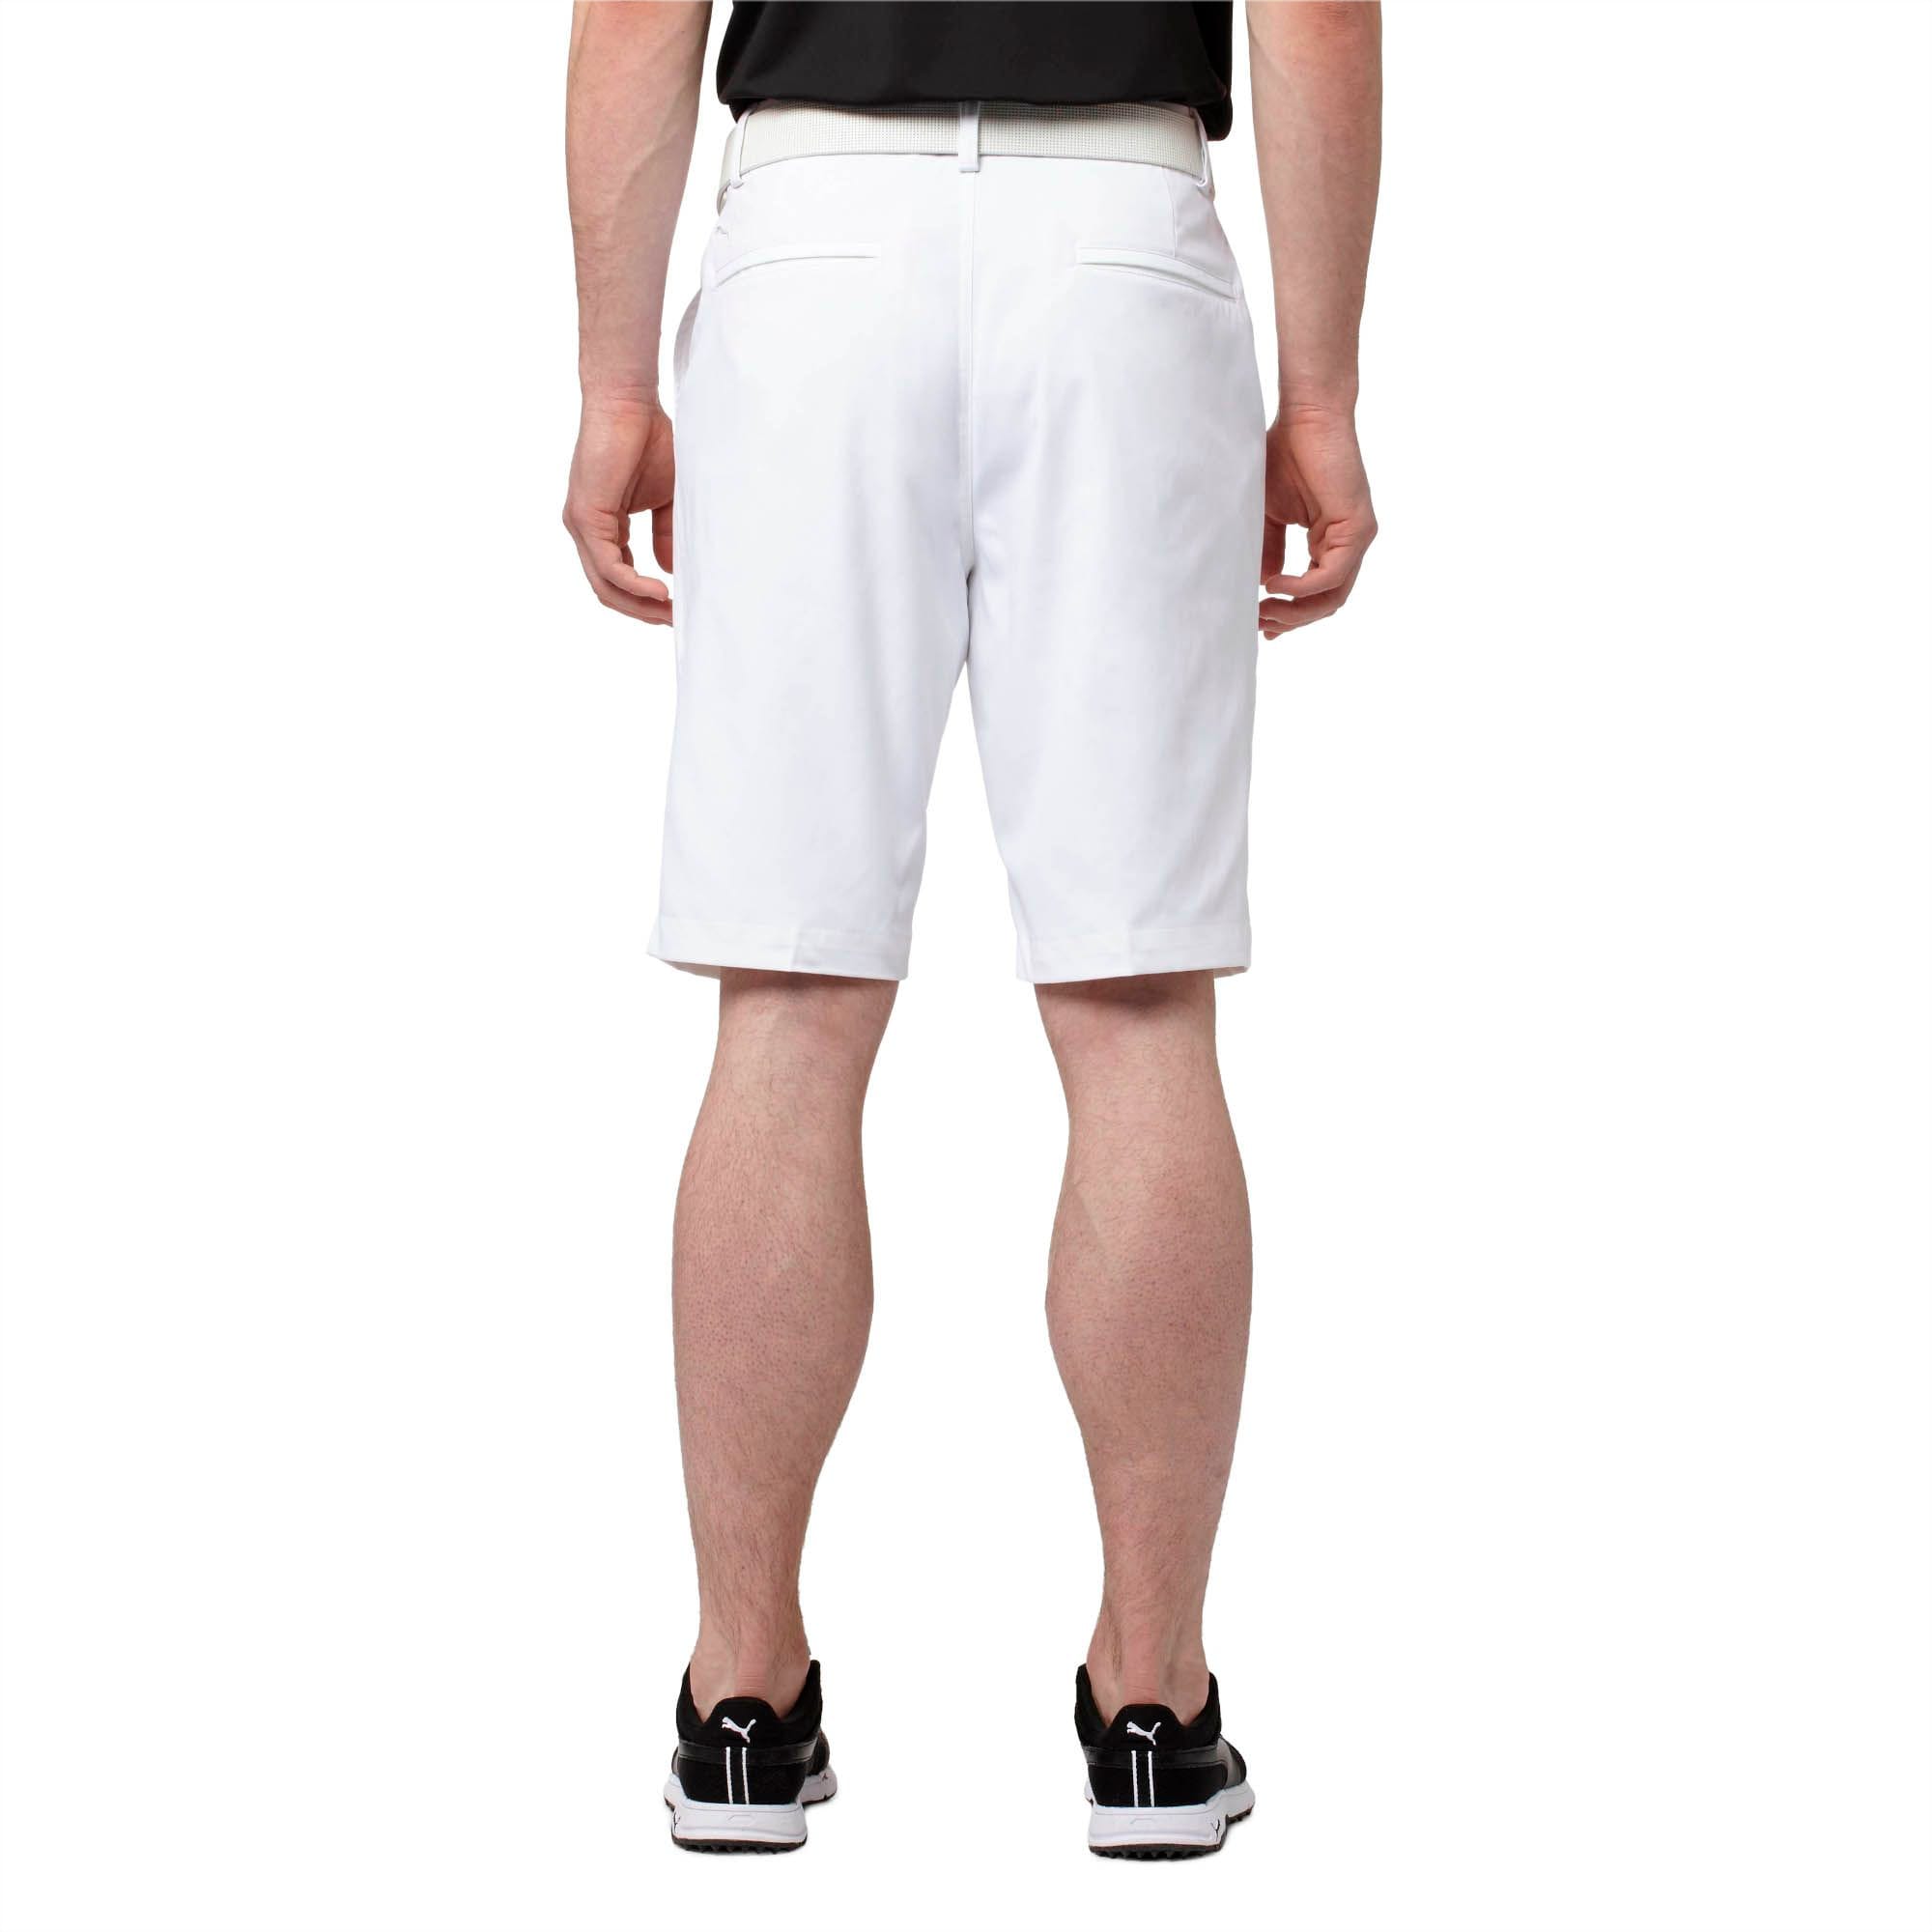 puma pounce golf shorts